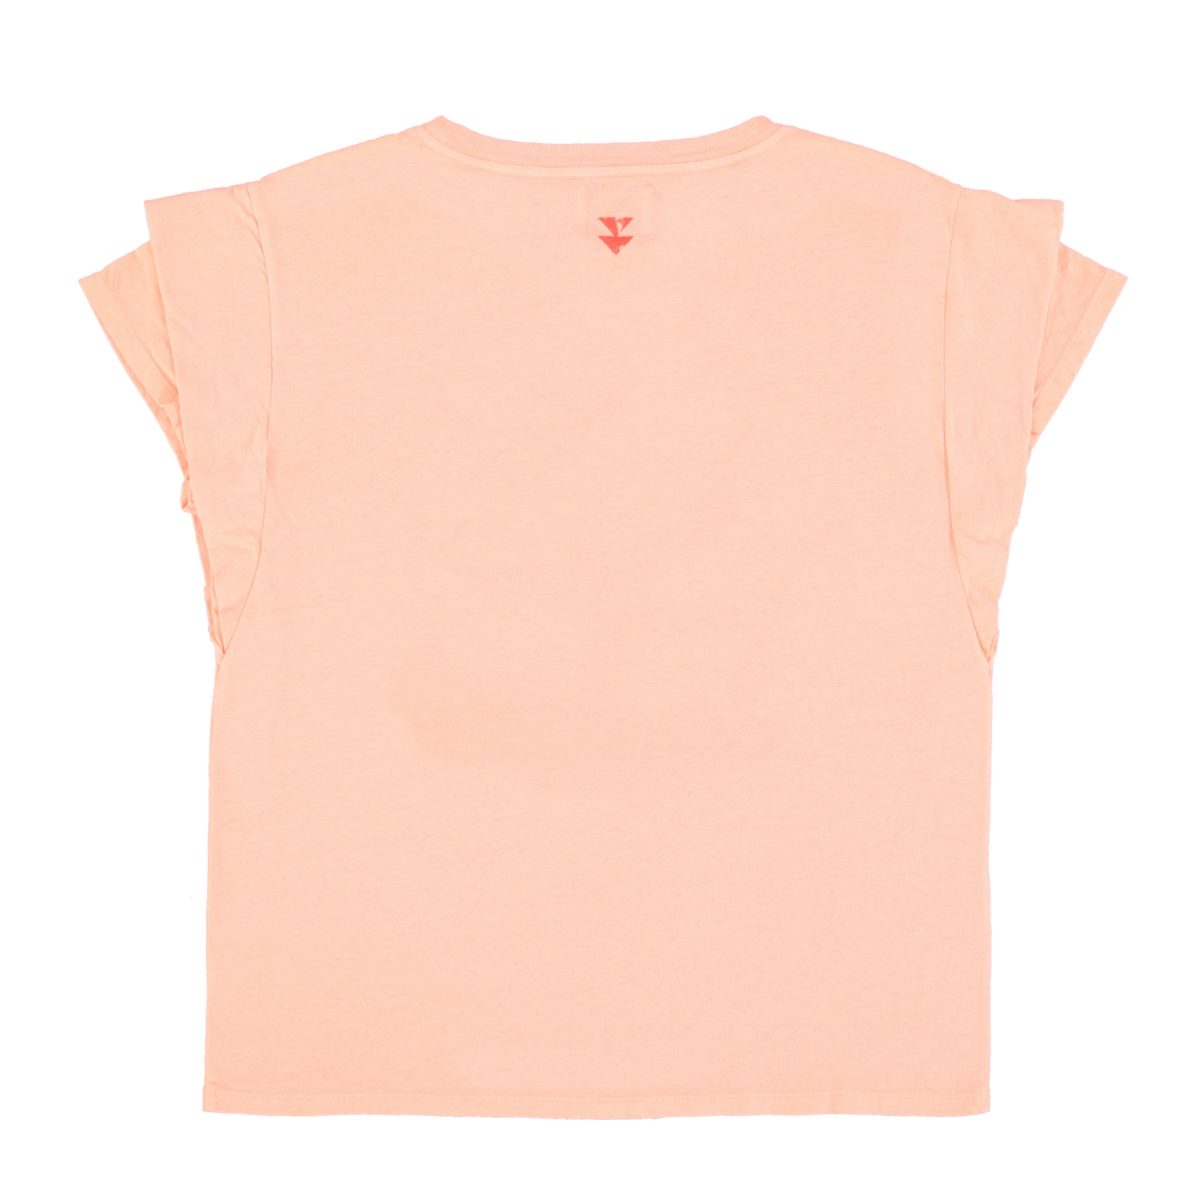 Double short sleeve t shirt pink w cherries print sisters department b